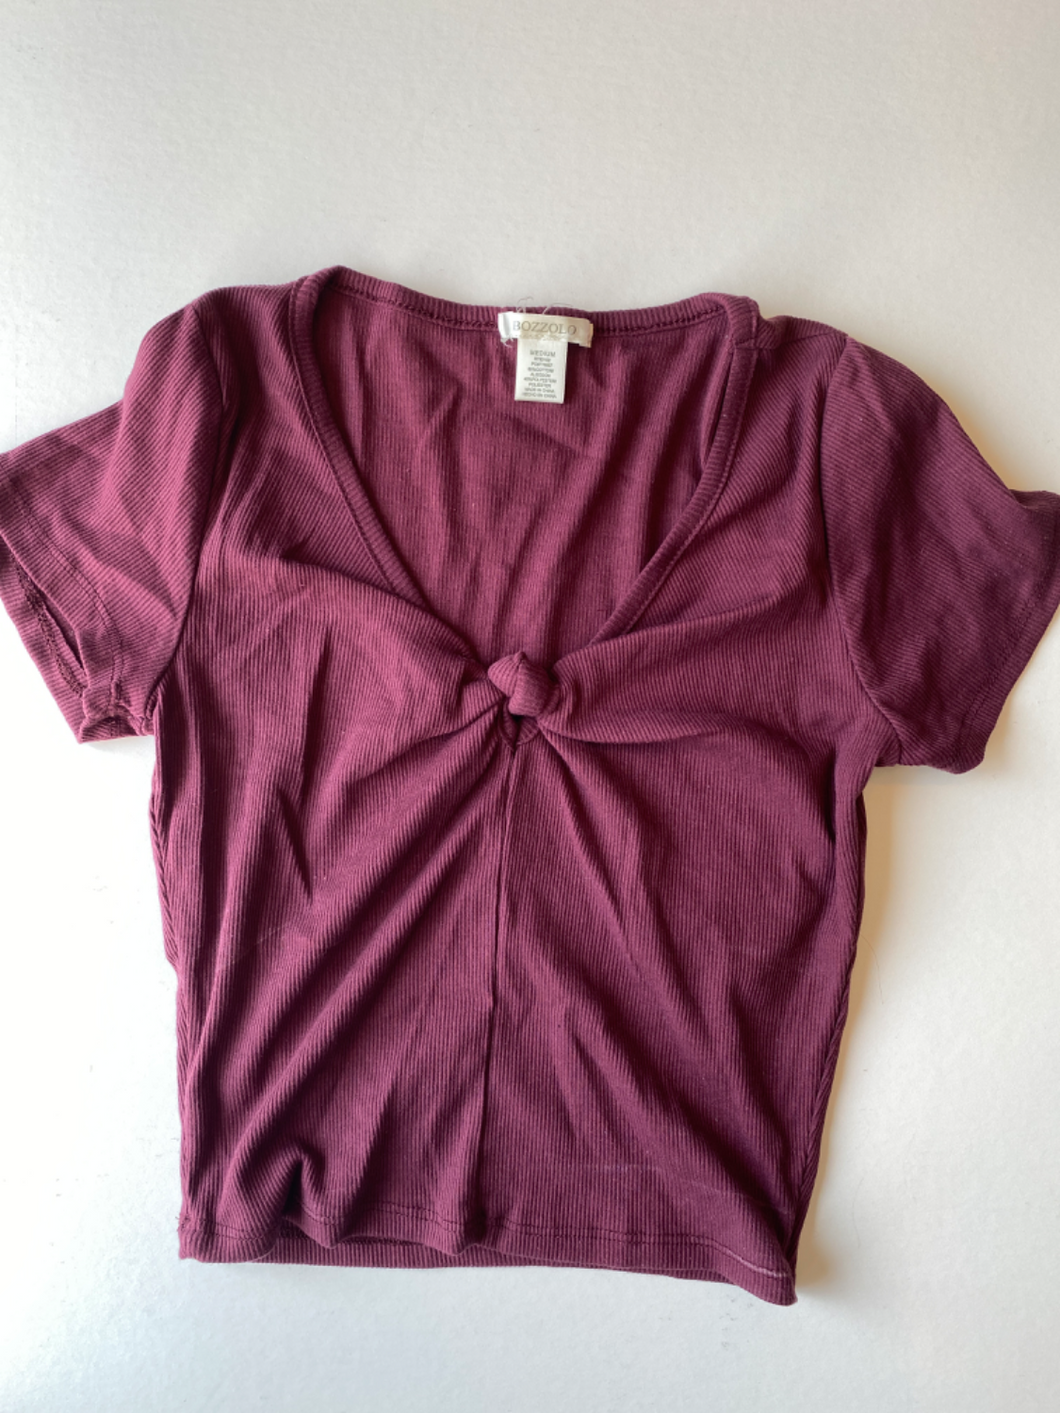 Bozzolo T-Shirt Size Medium